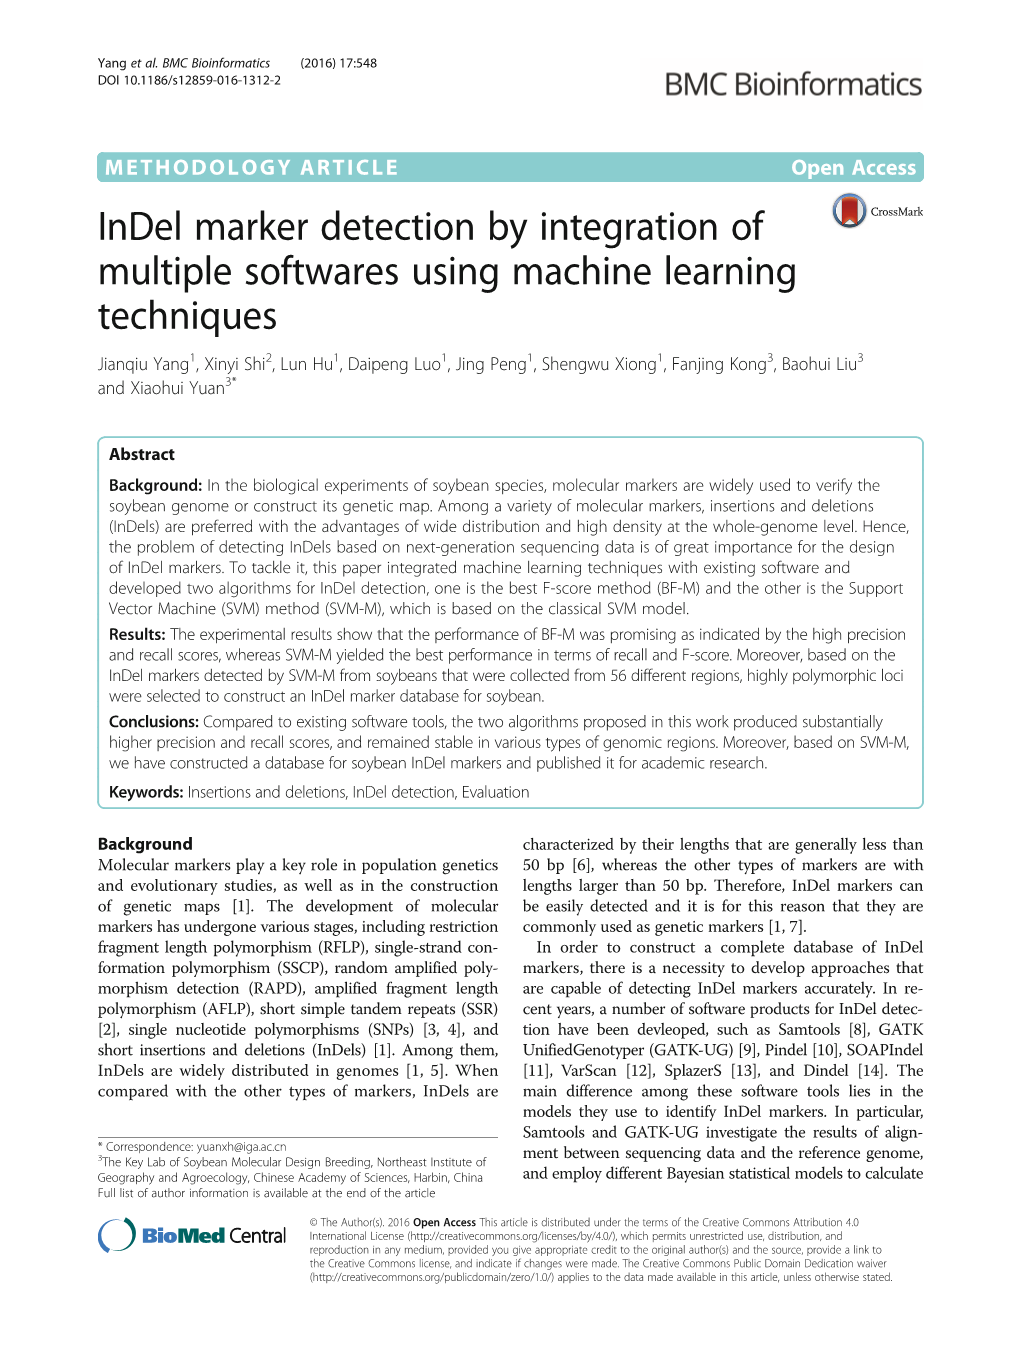 Indel Marker Detection by Integration of Multiple Softwares Using Machine